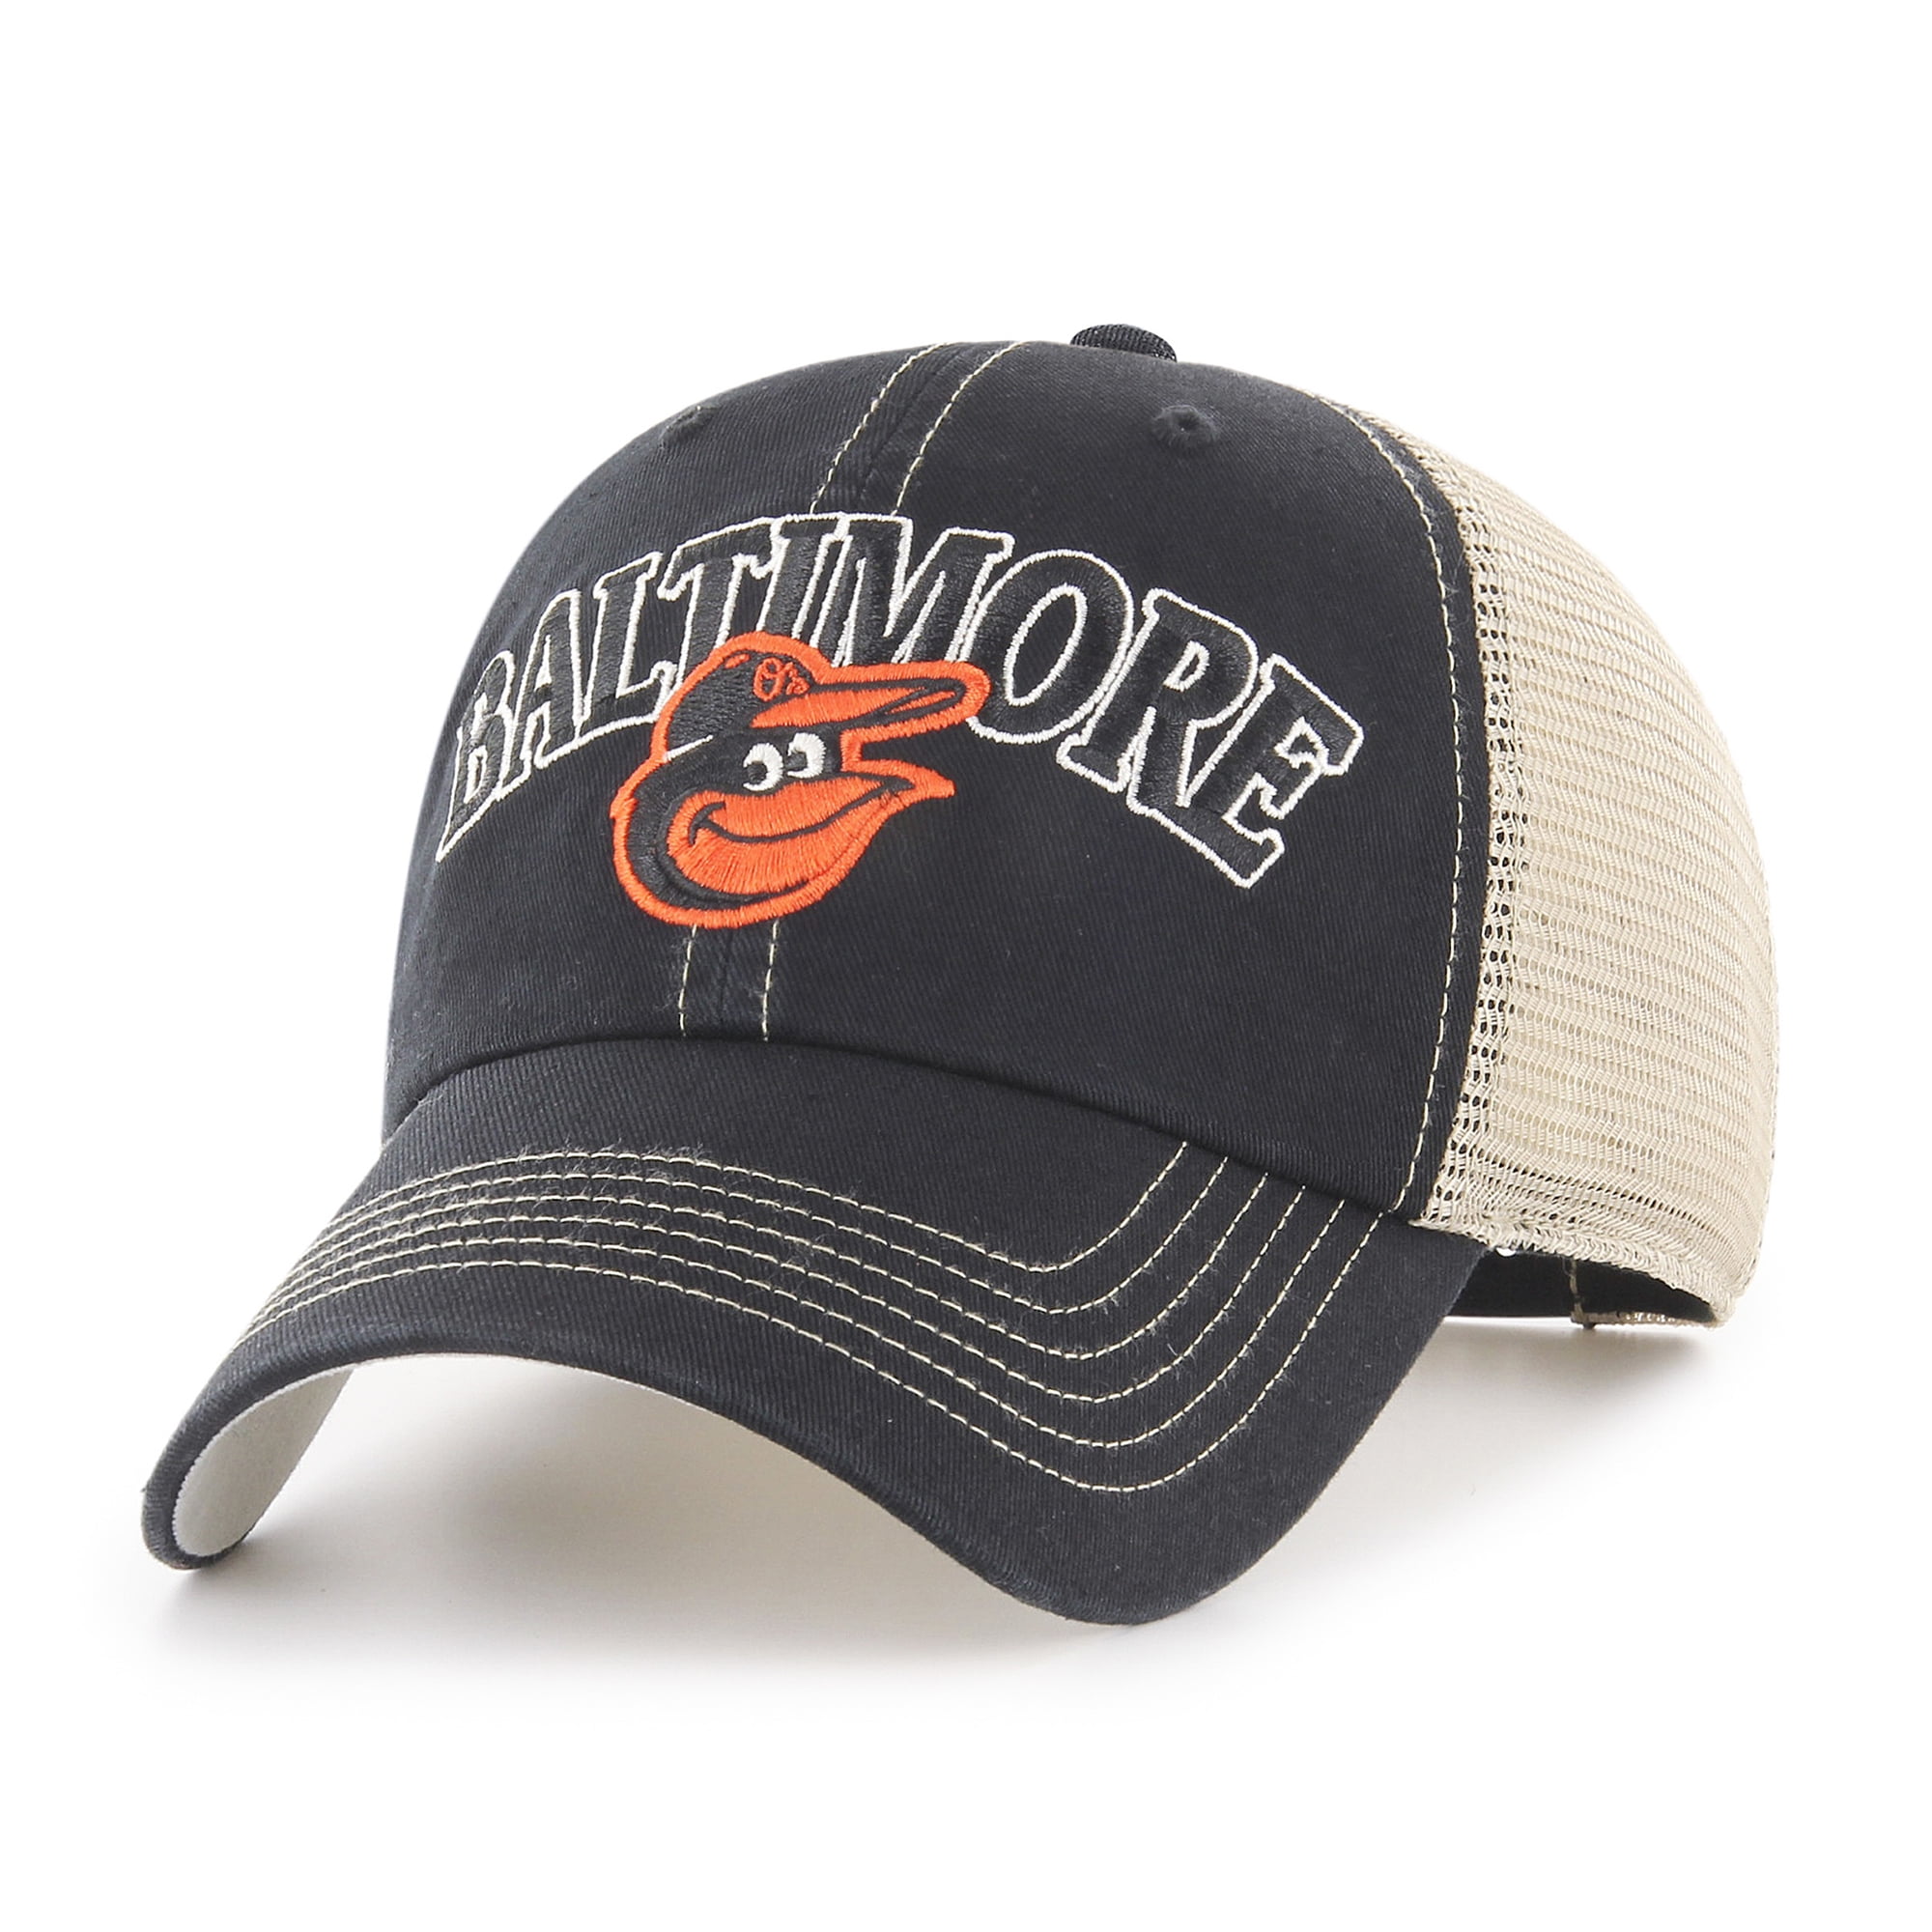 MLB Baltimore Orioles Aliquippa Adjustable Cap/Hat by Fan Favorite